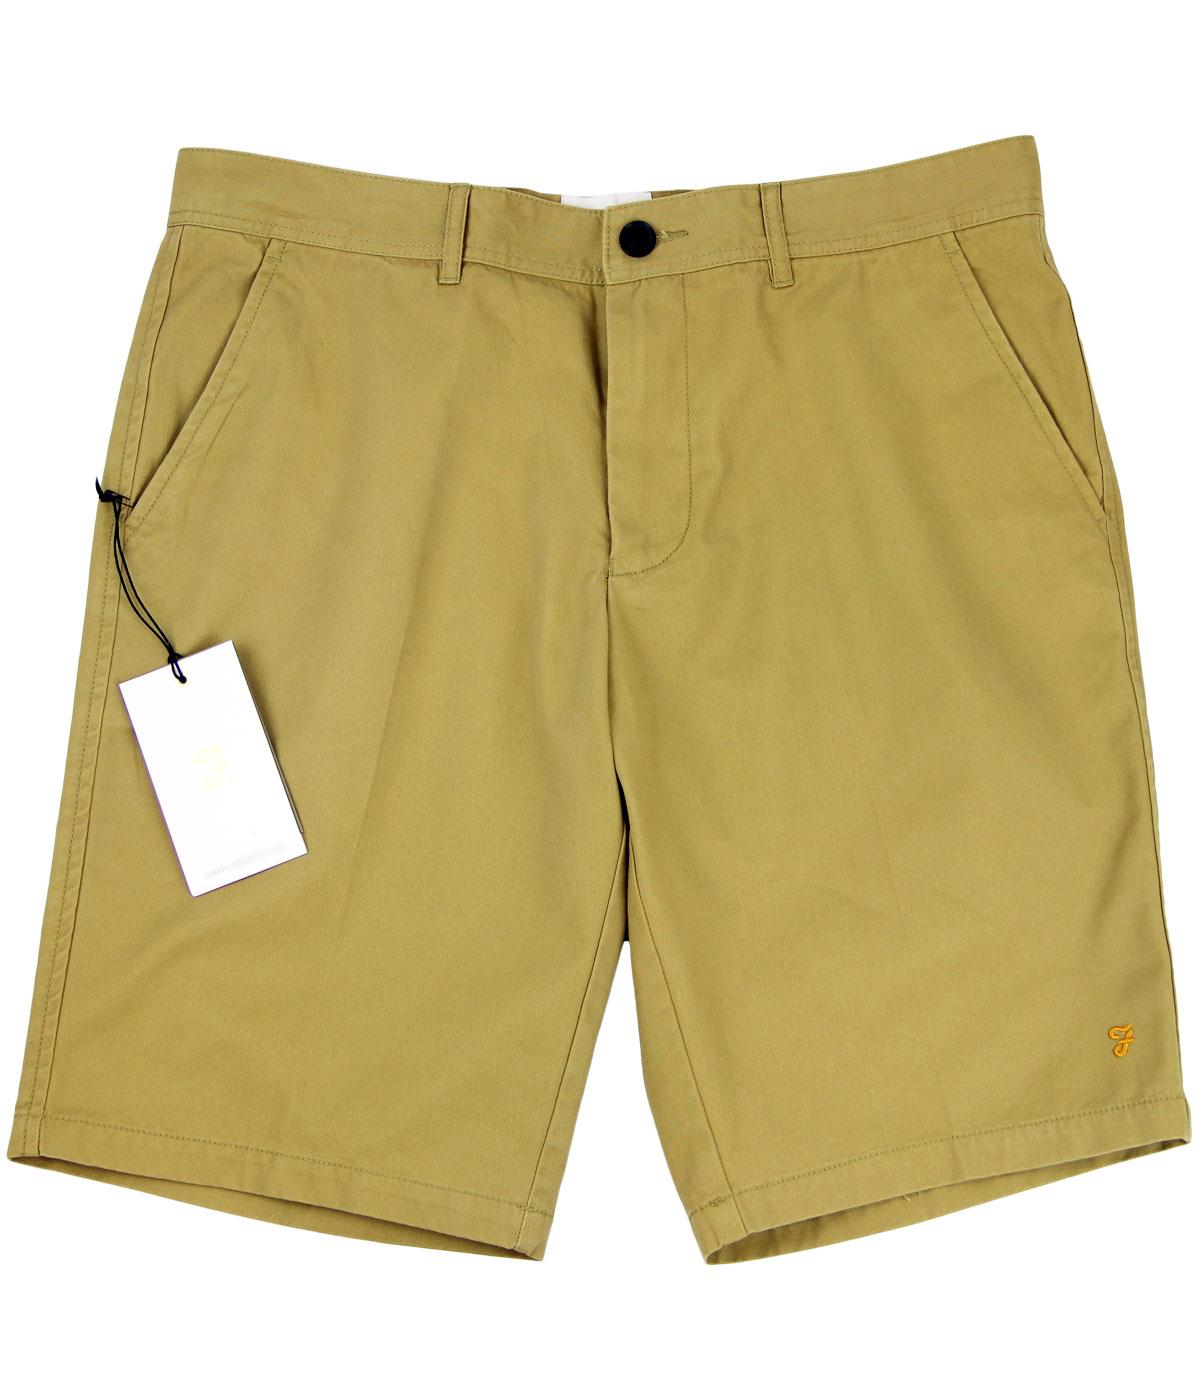 Berkley FARAH Retro Cotton Twill Smart Shorts (AB)